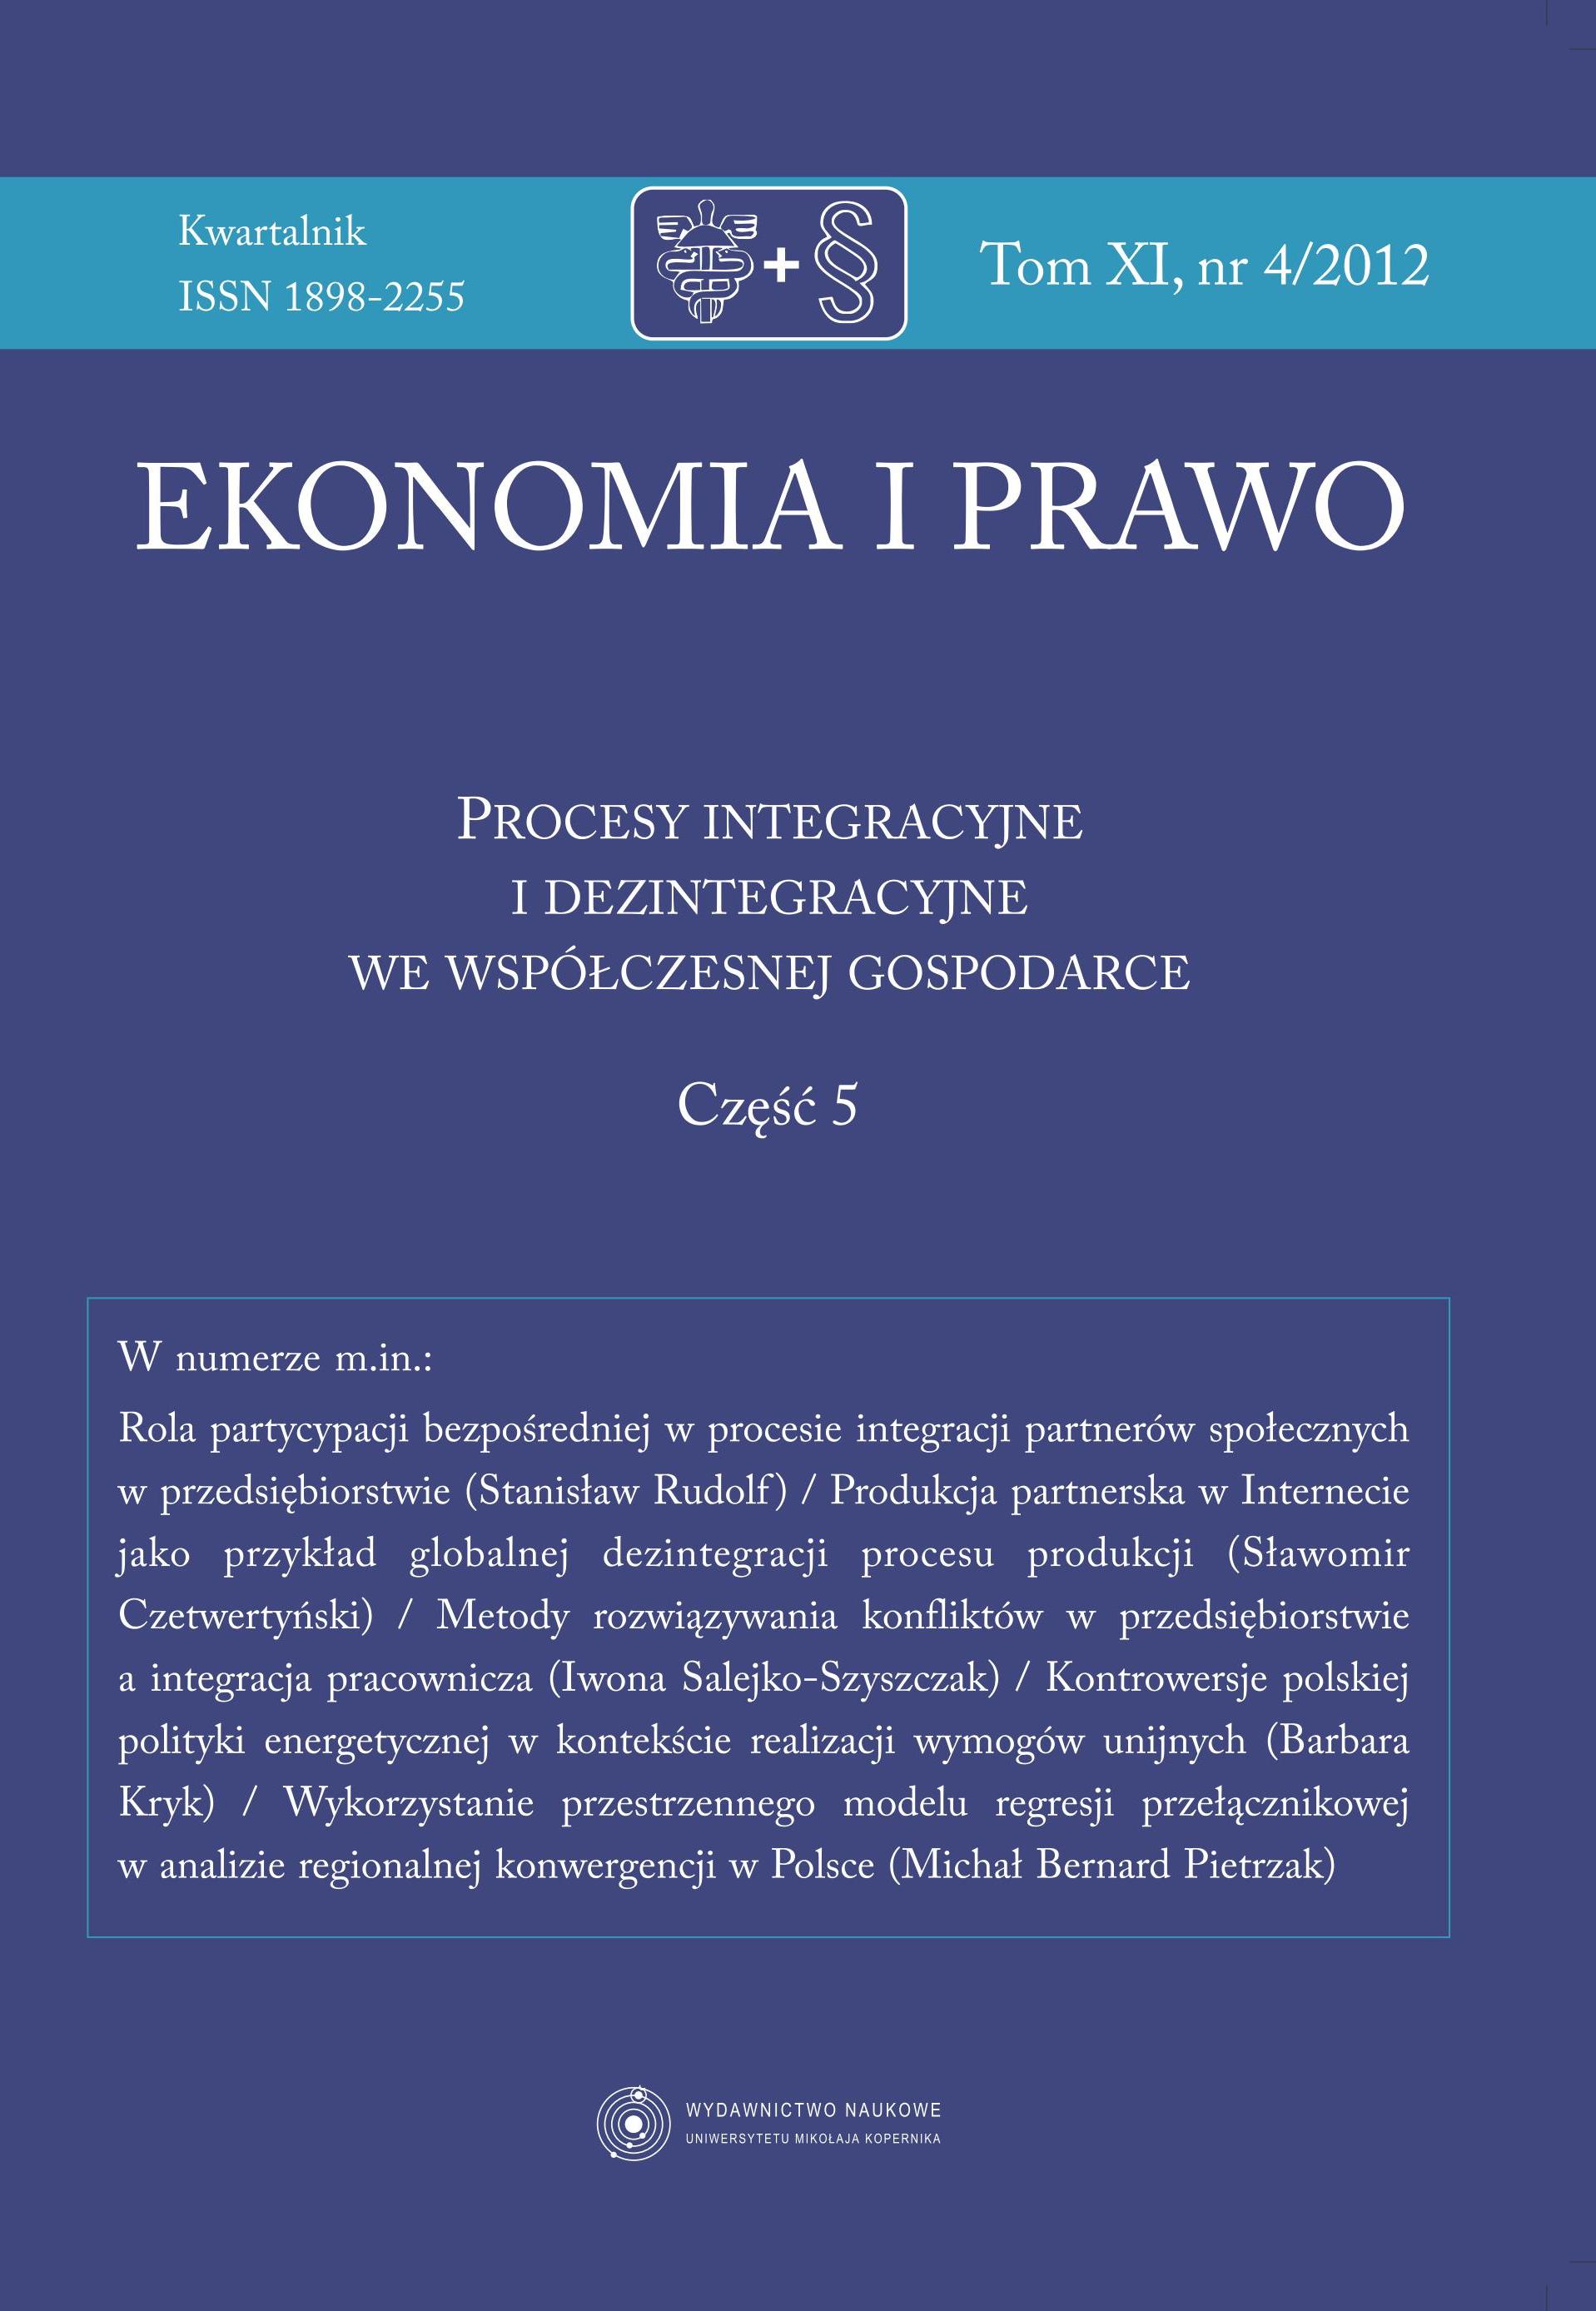 Ekonomia i Prawo. Economics and Law